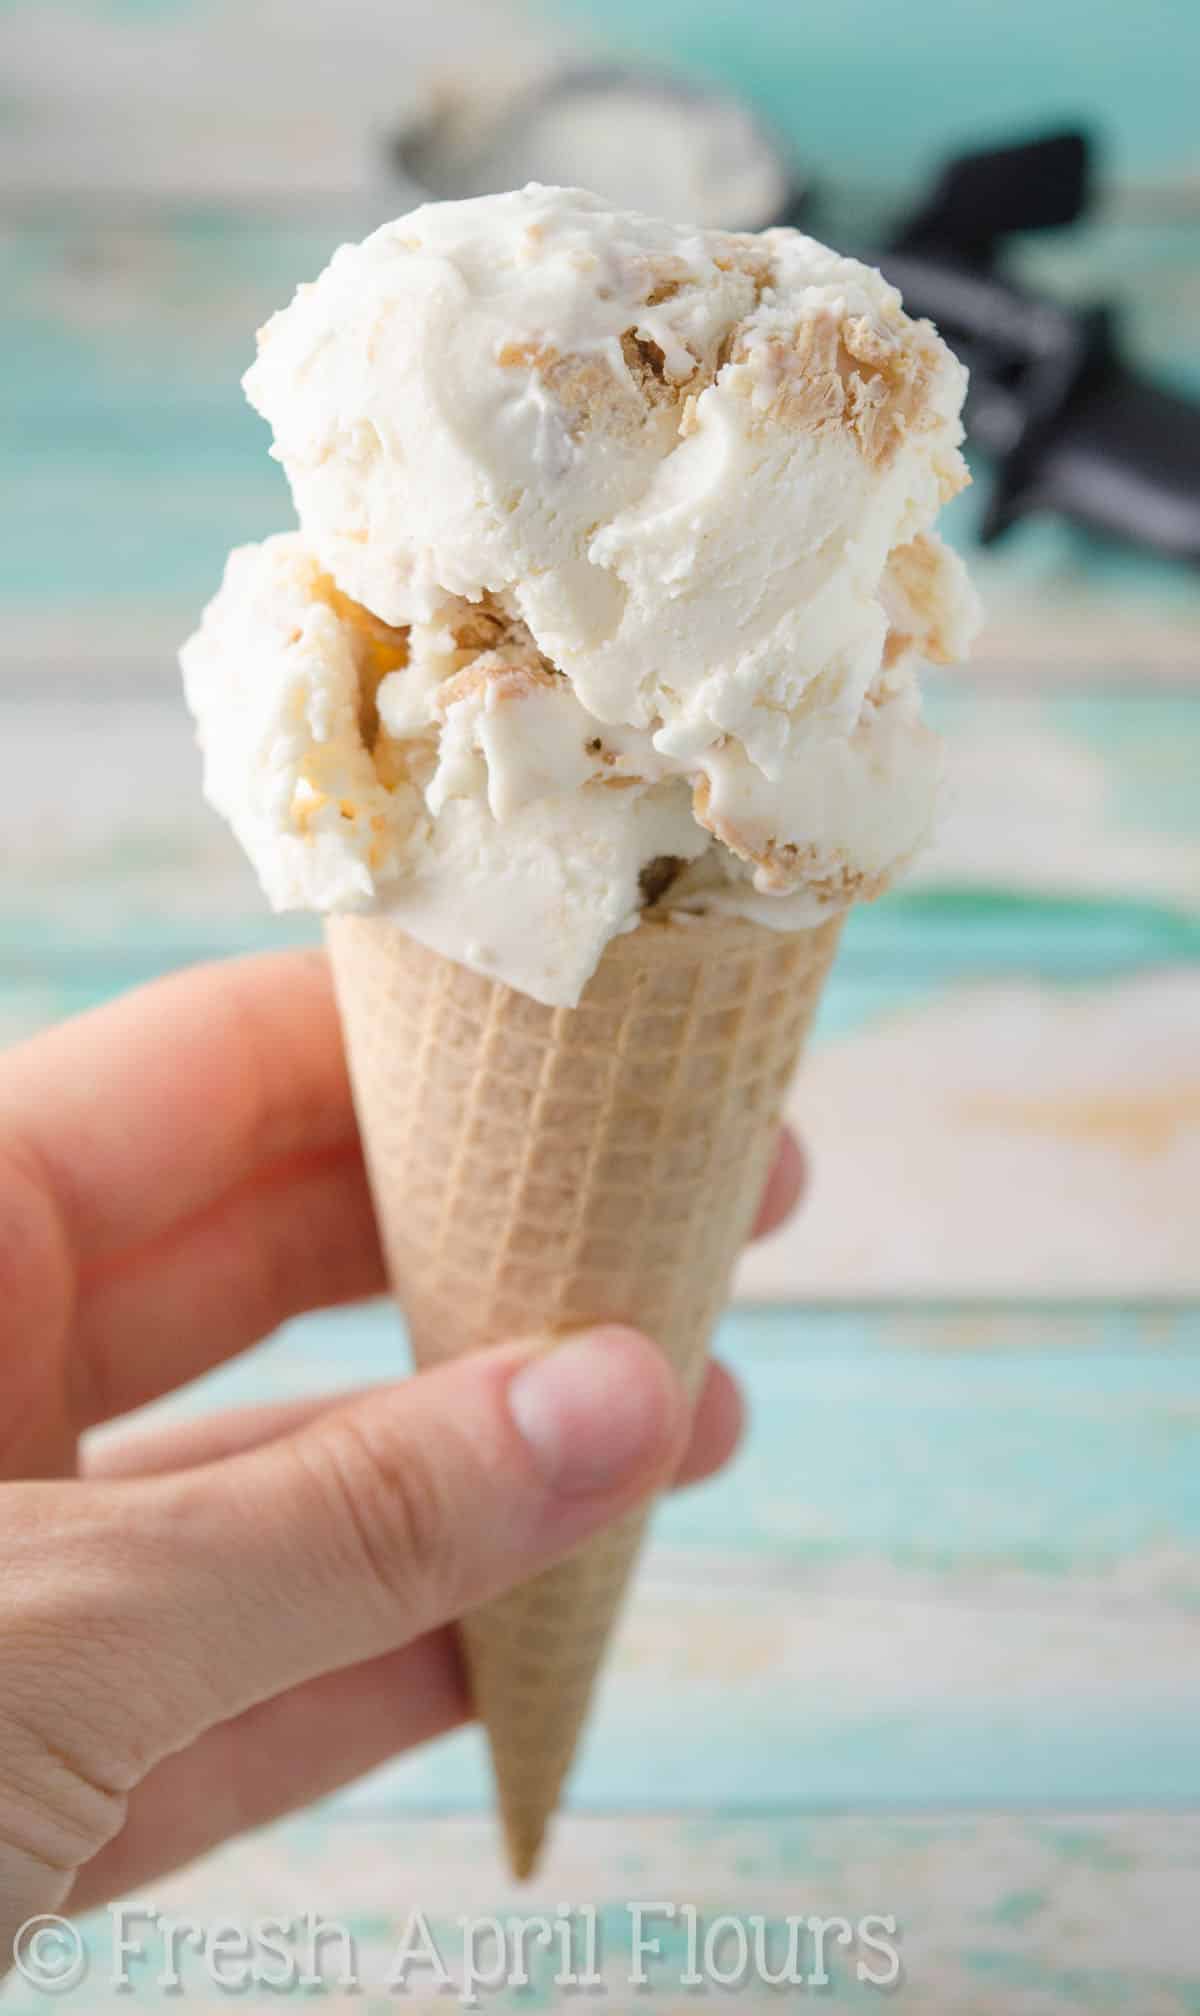 A hand holding an ice cream cone full of no churn peanut butter ripple ice cream.